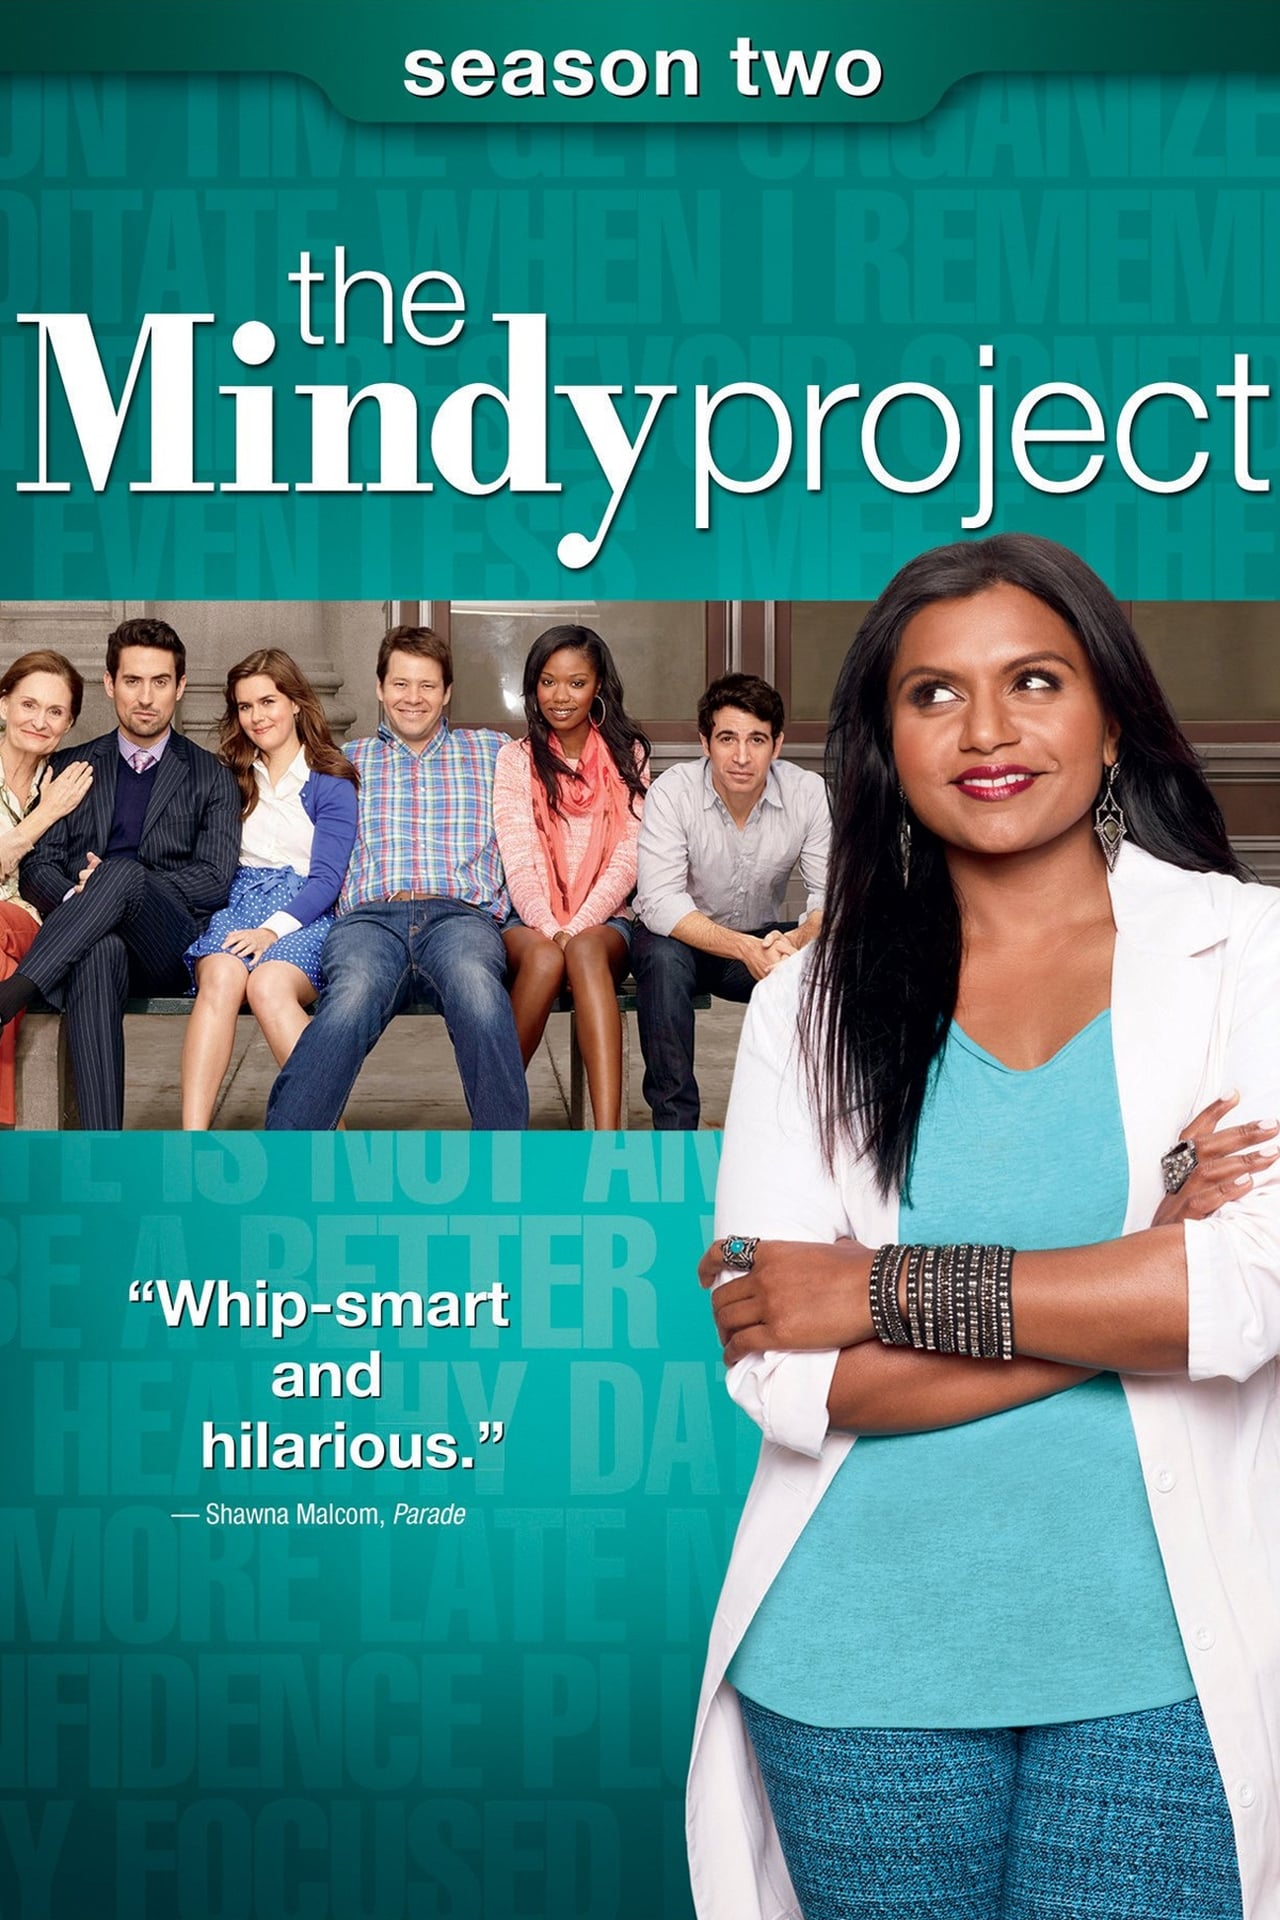 The Mindy Project Season 2